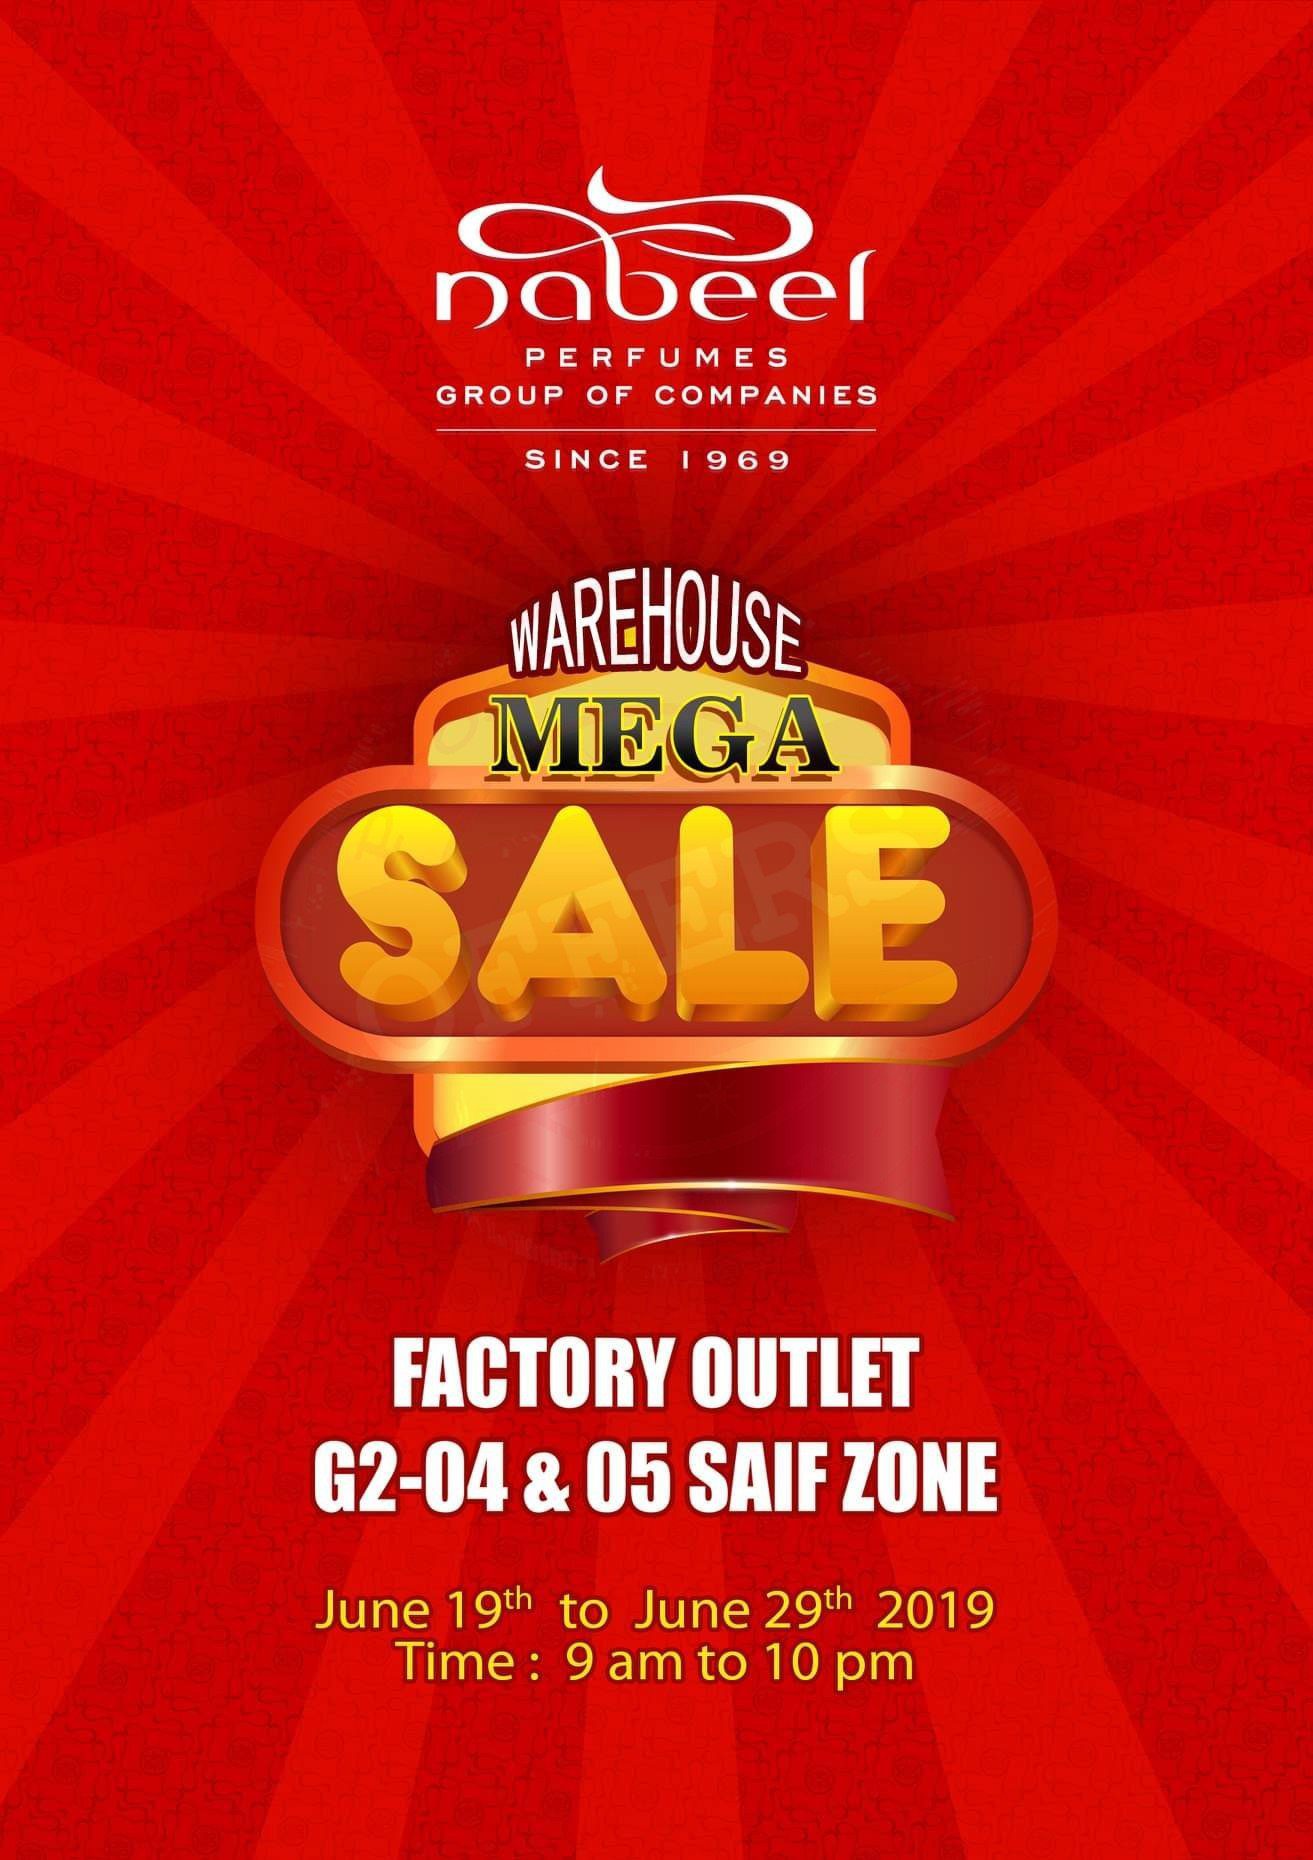 Nabeel’s Warehouse Mega Sale